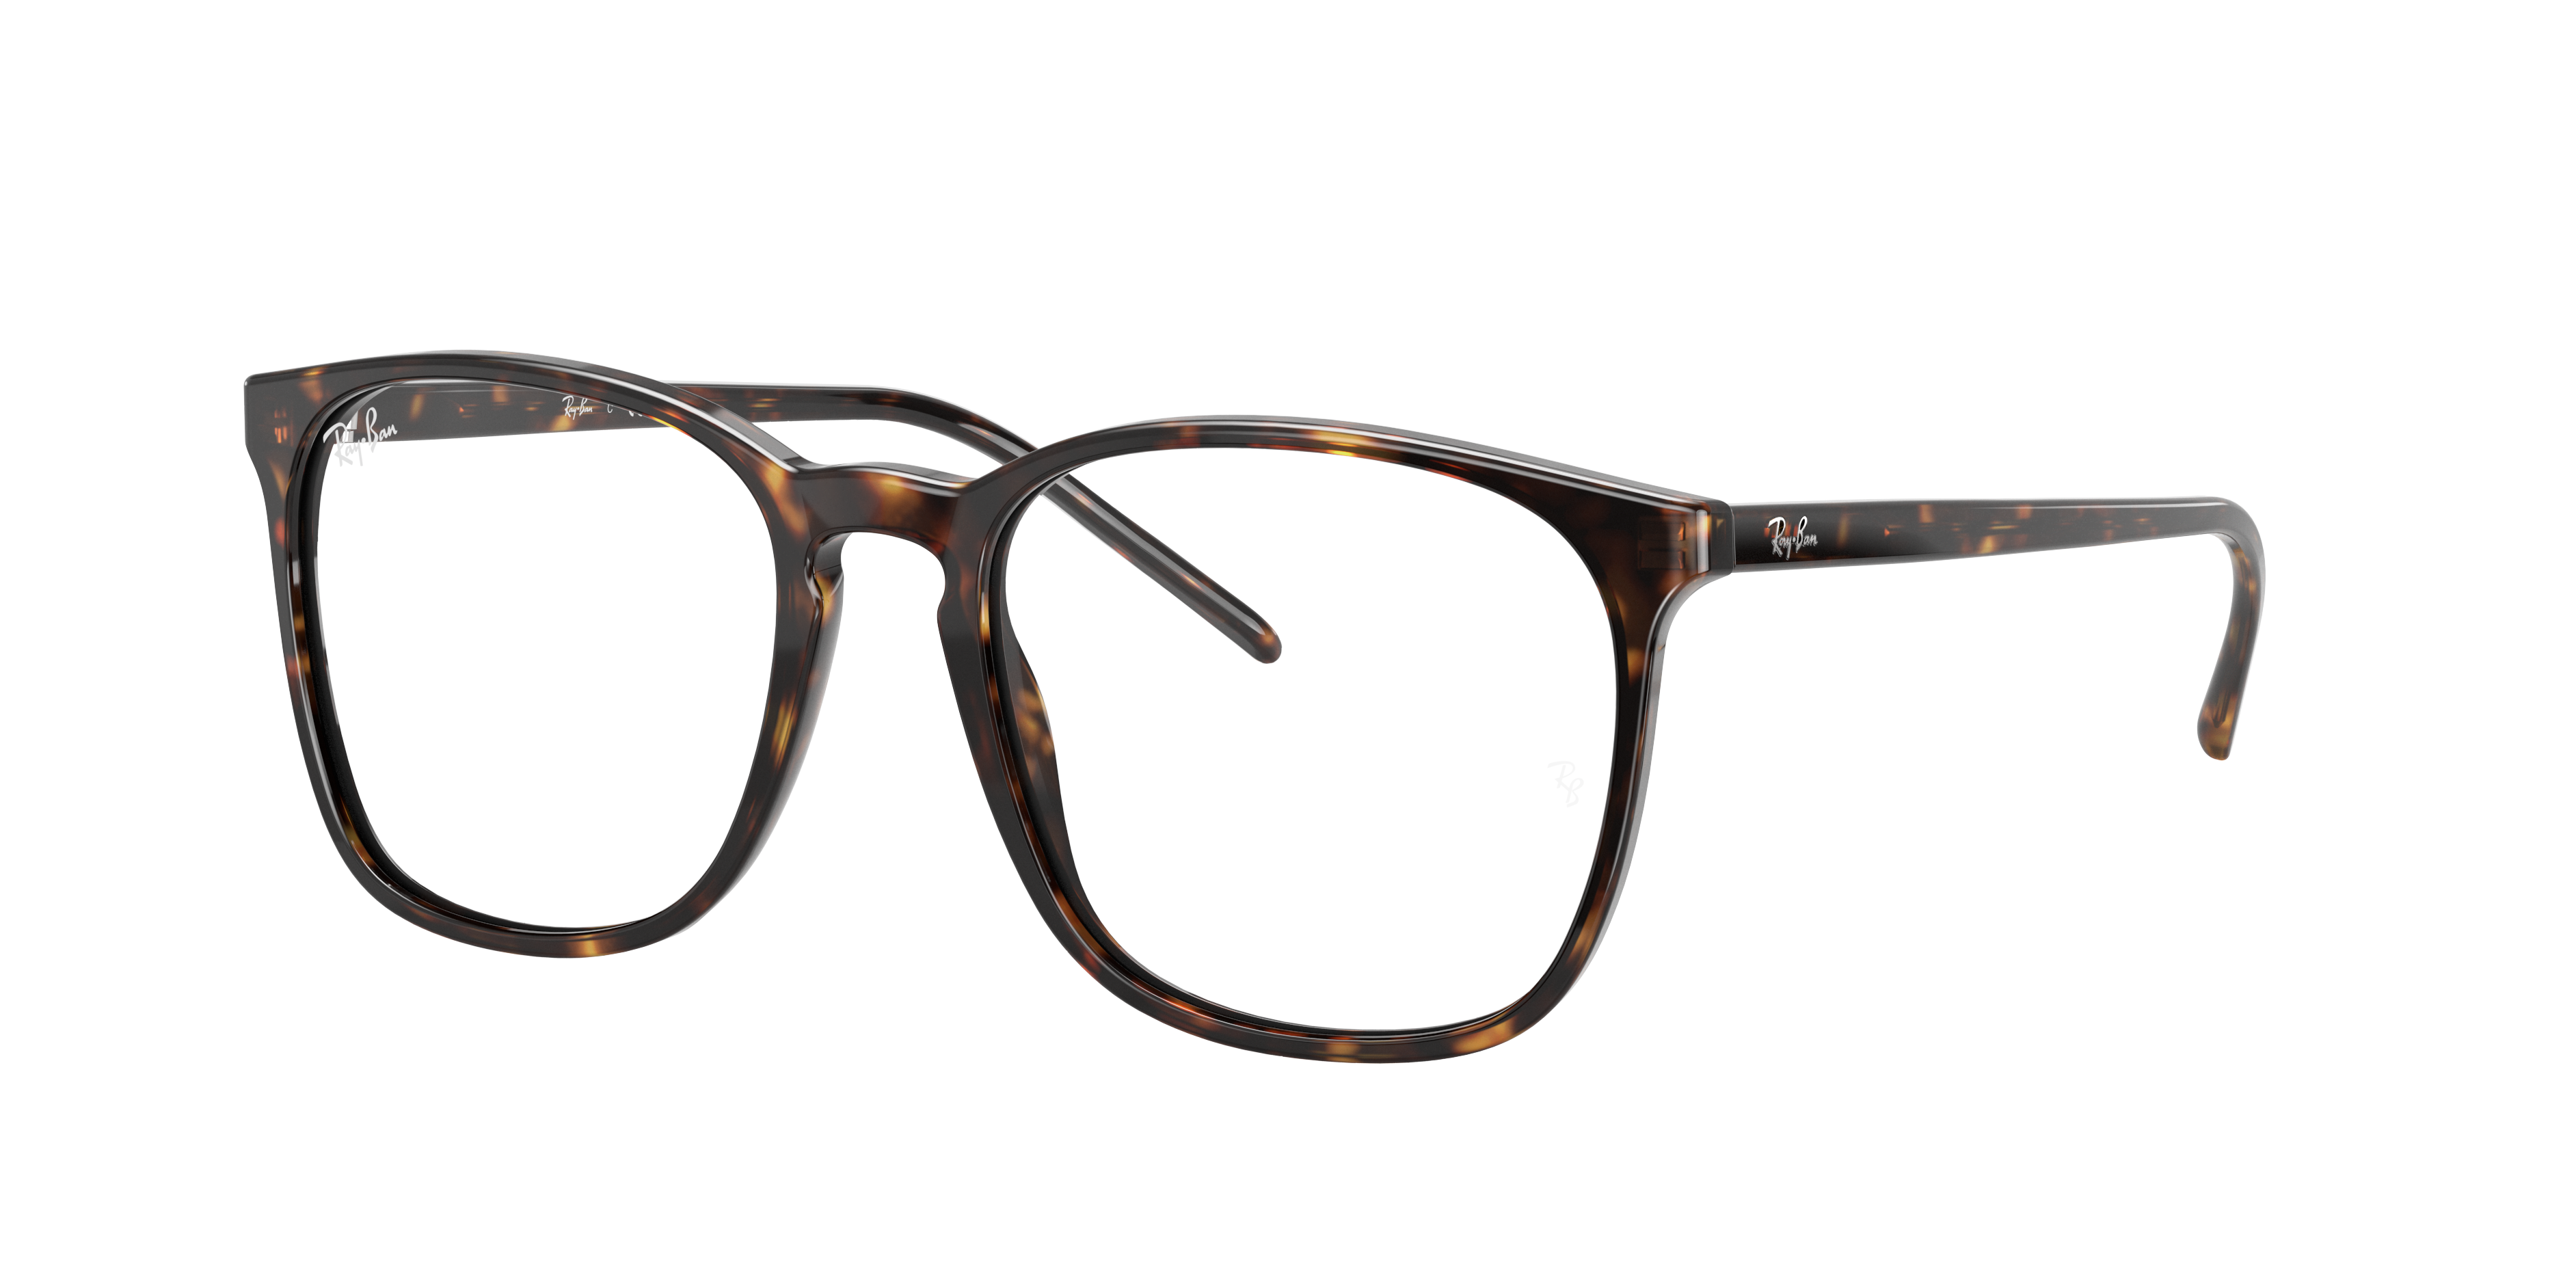 Rb5387 Optics Eyeglasses with Havana Frame | Ray-Ban®